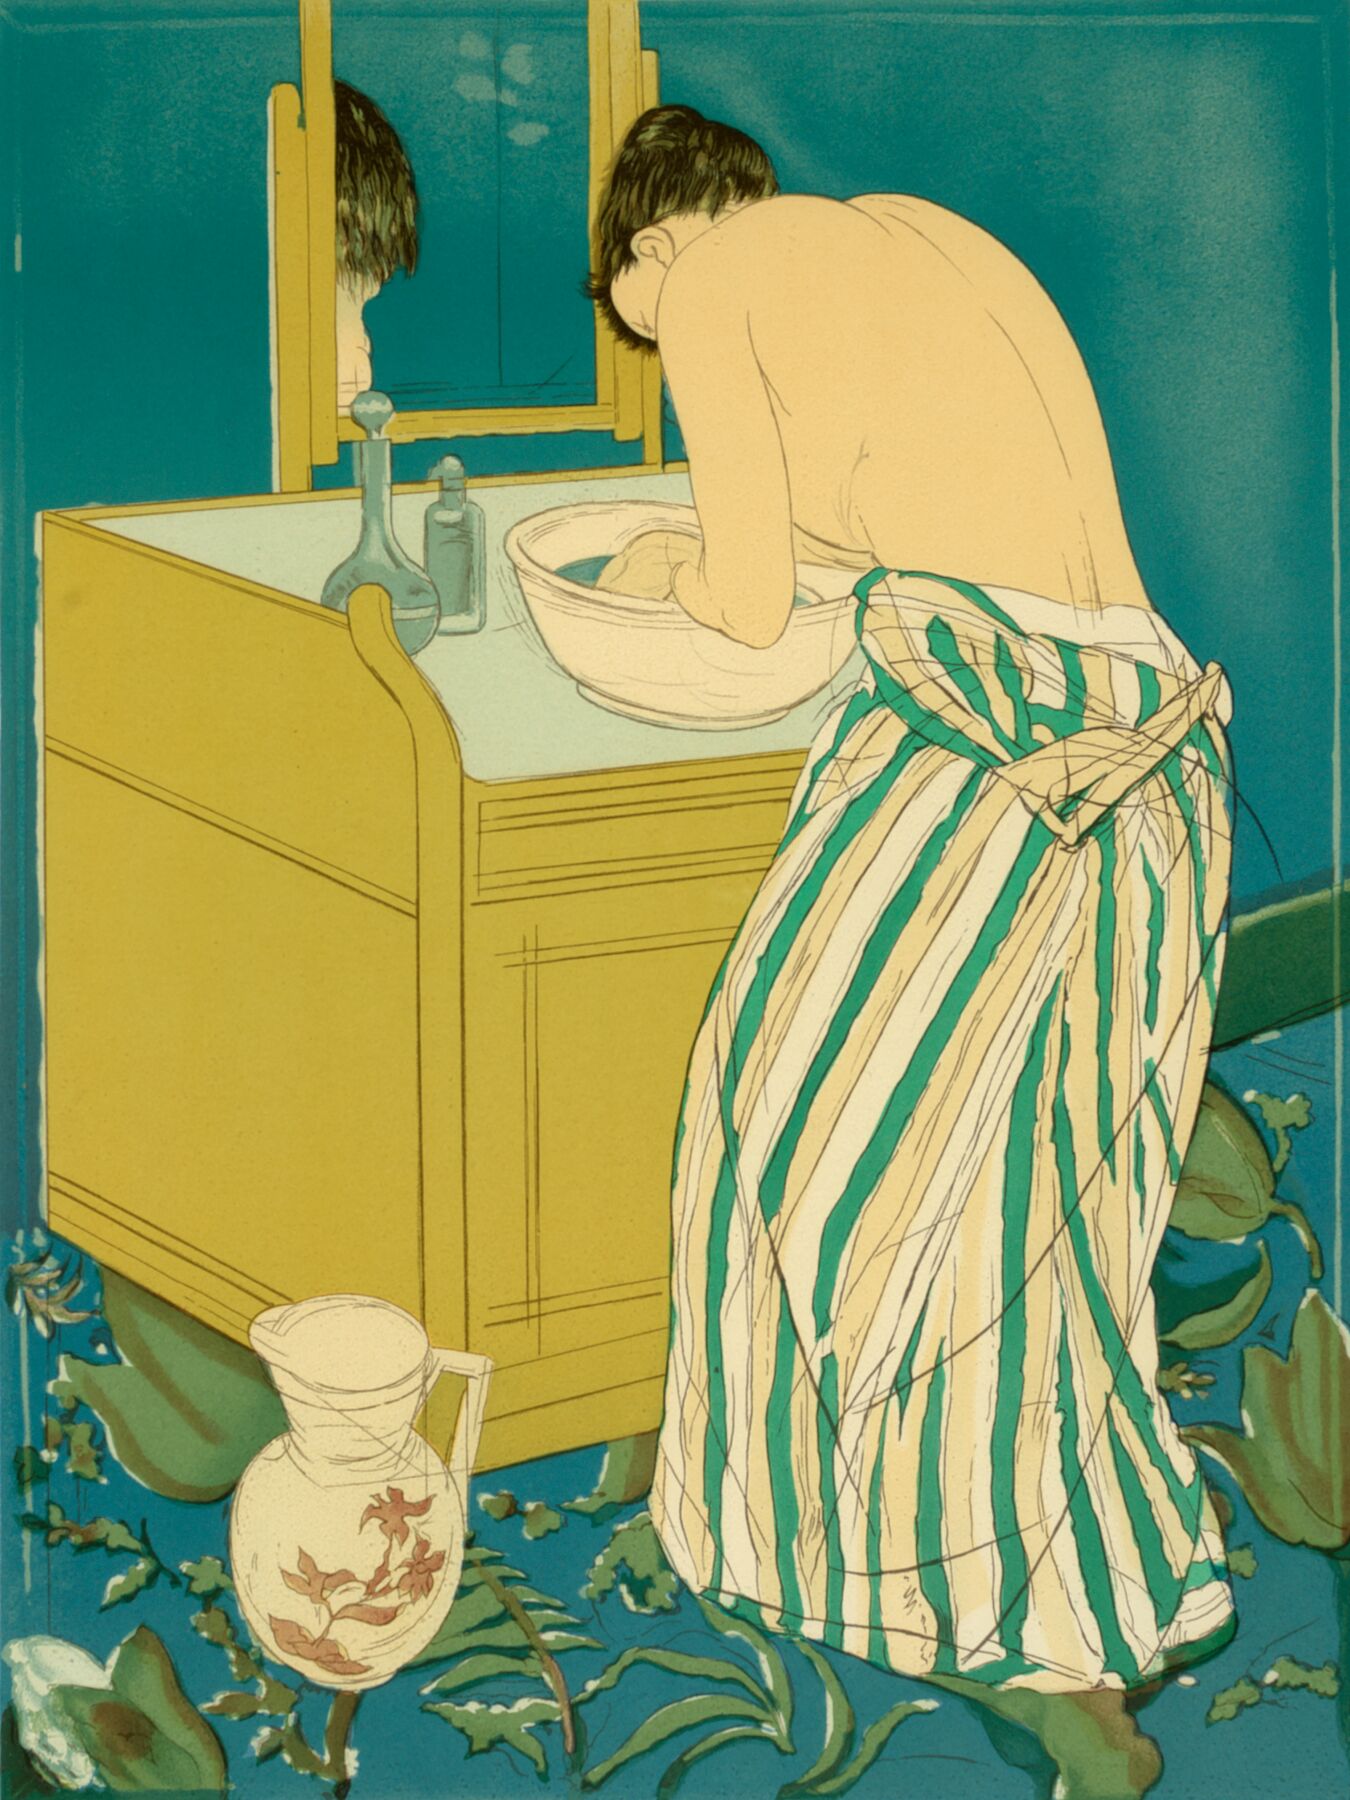 A Woman Bathing by Mary Cassatt - 1890